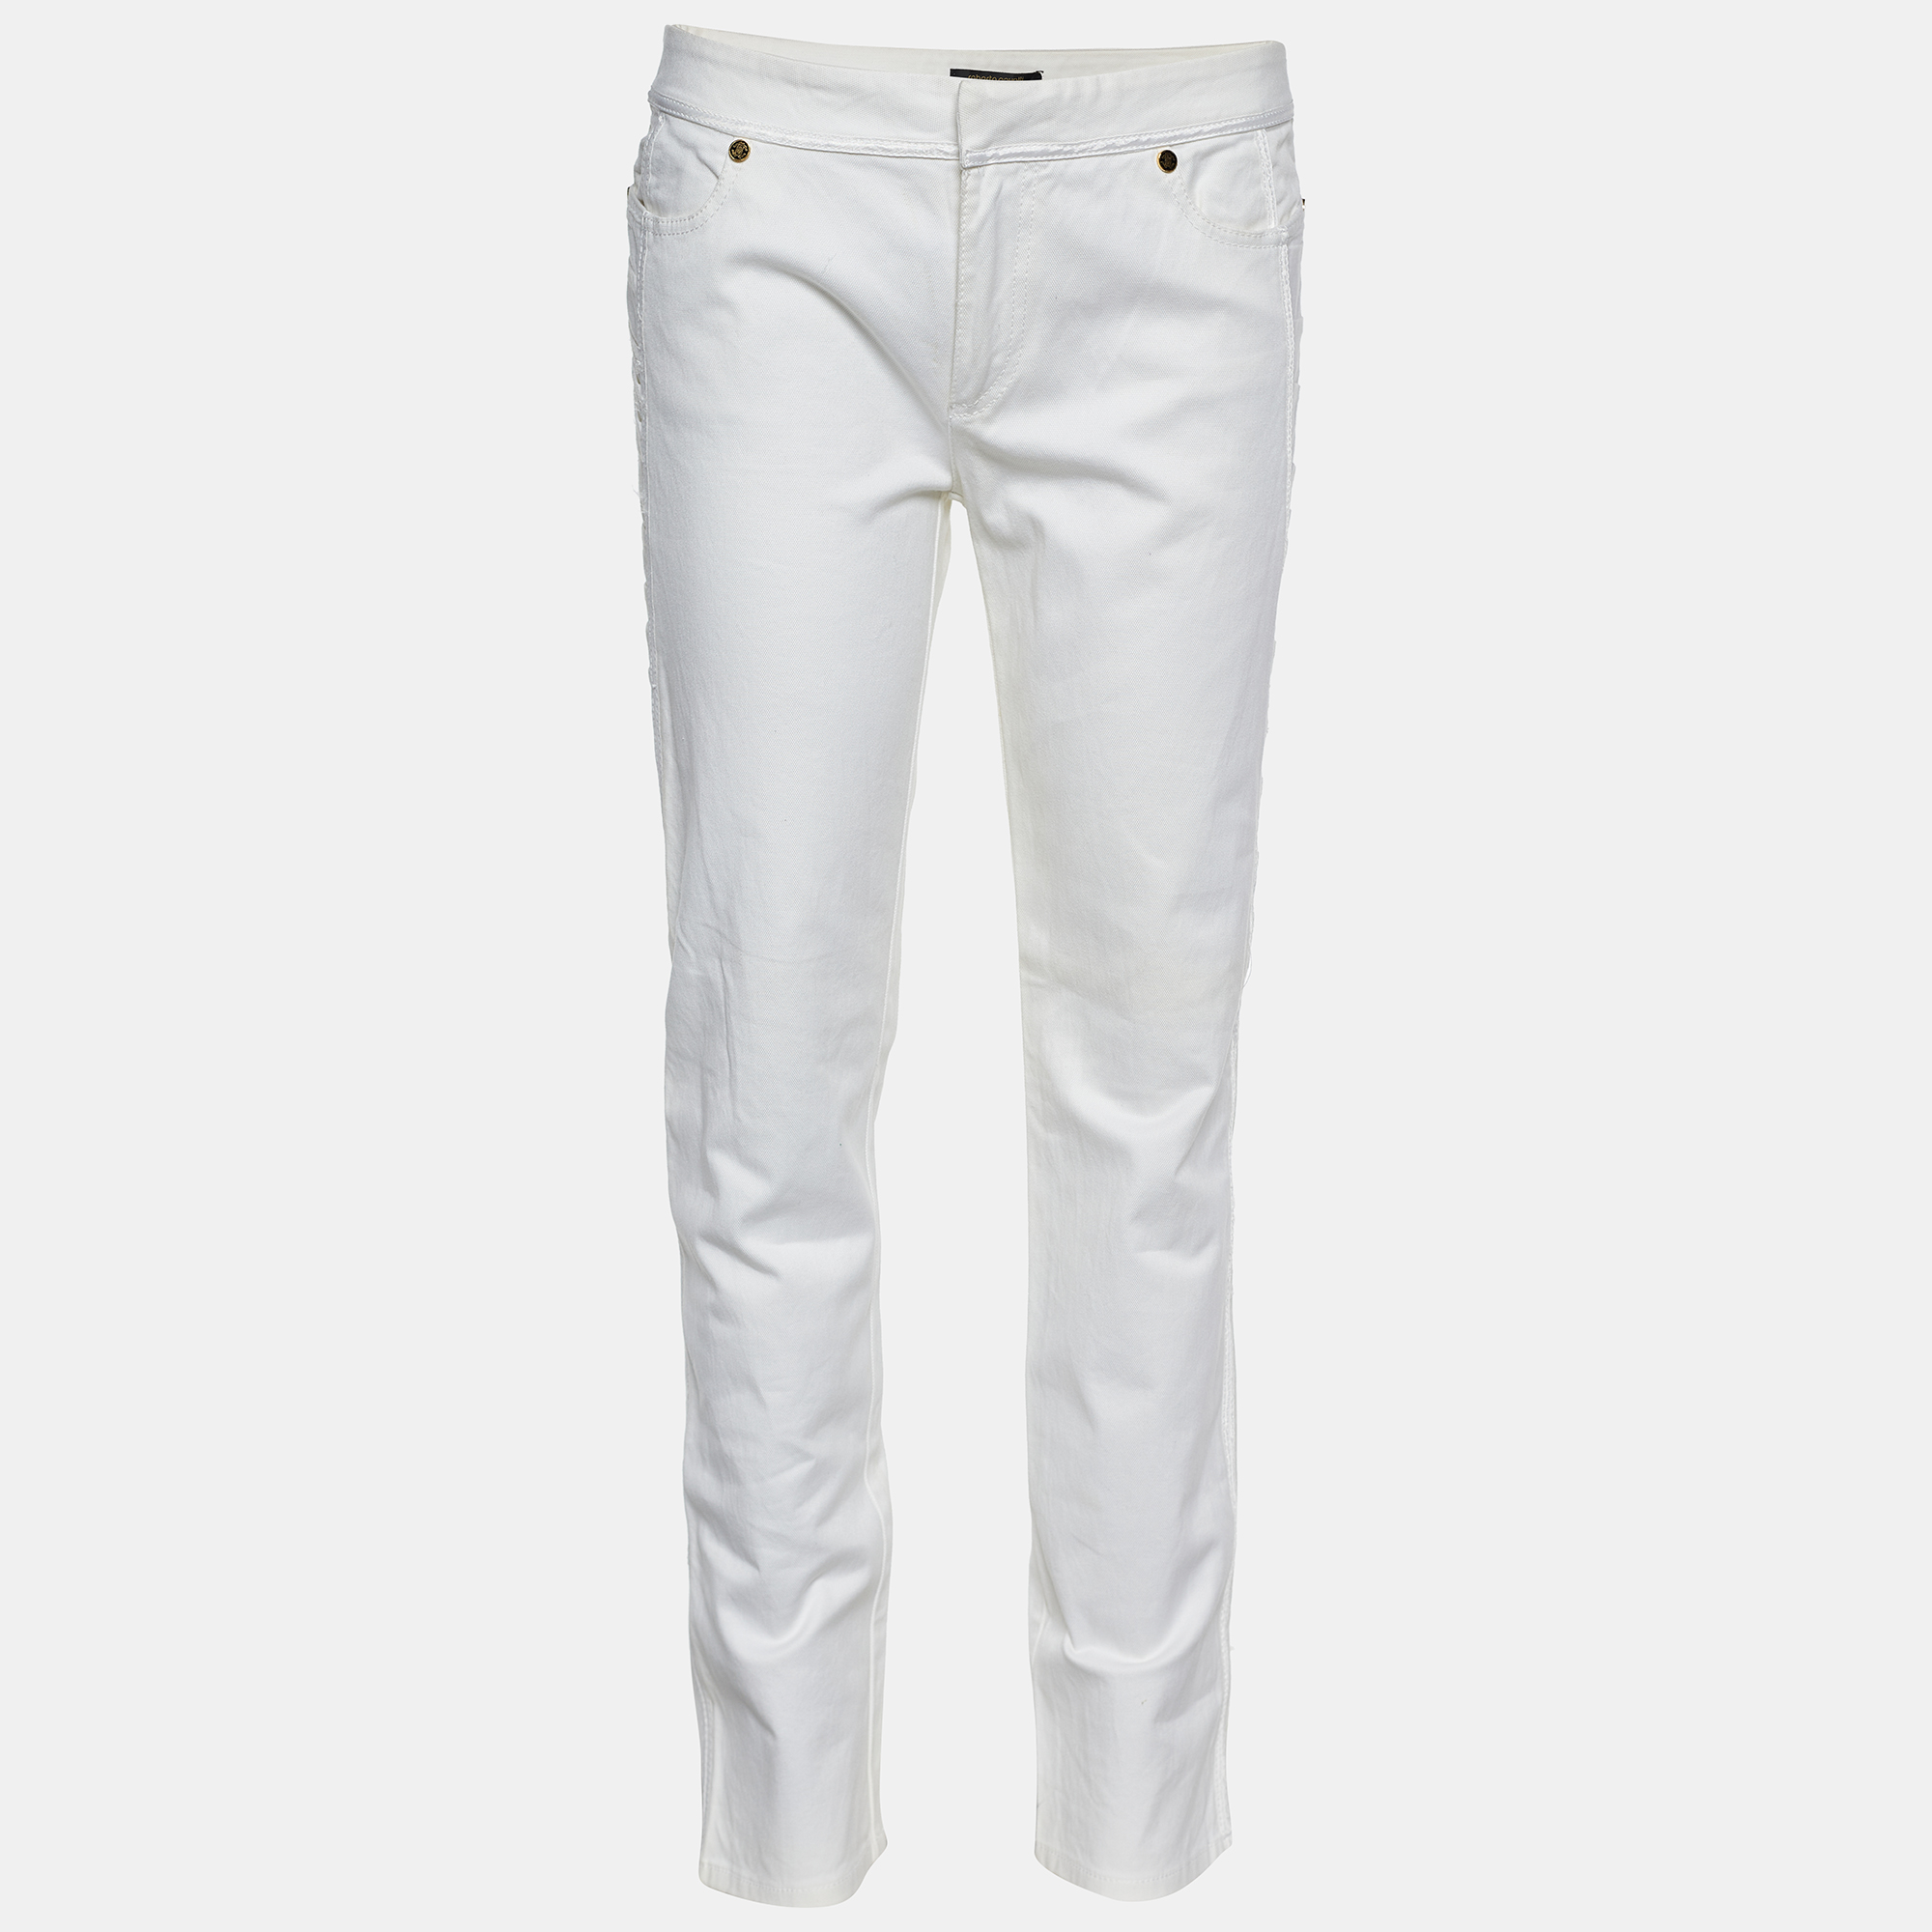 Roberto Cavalli White Denim Straight Fit Jeans Waist 30